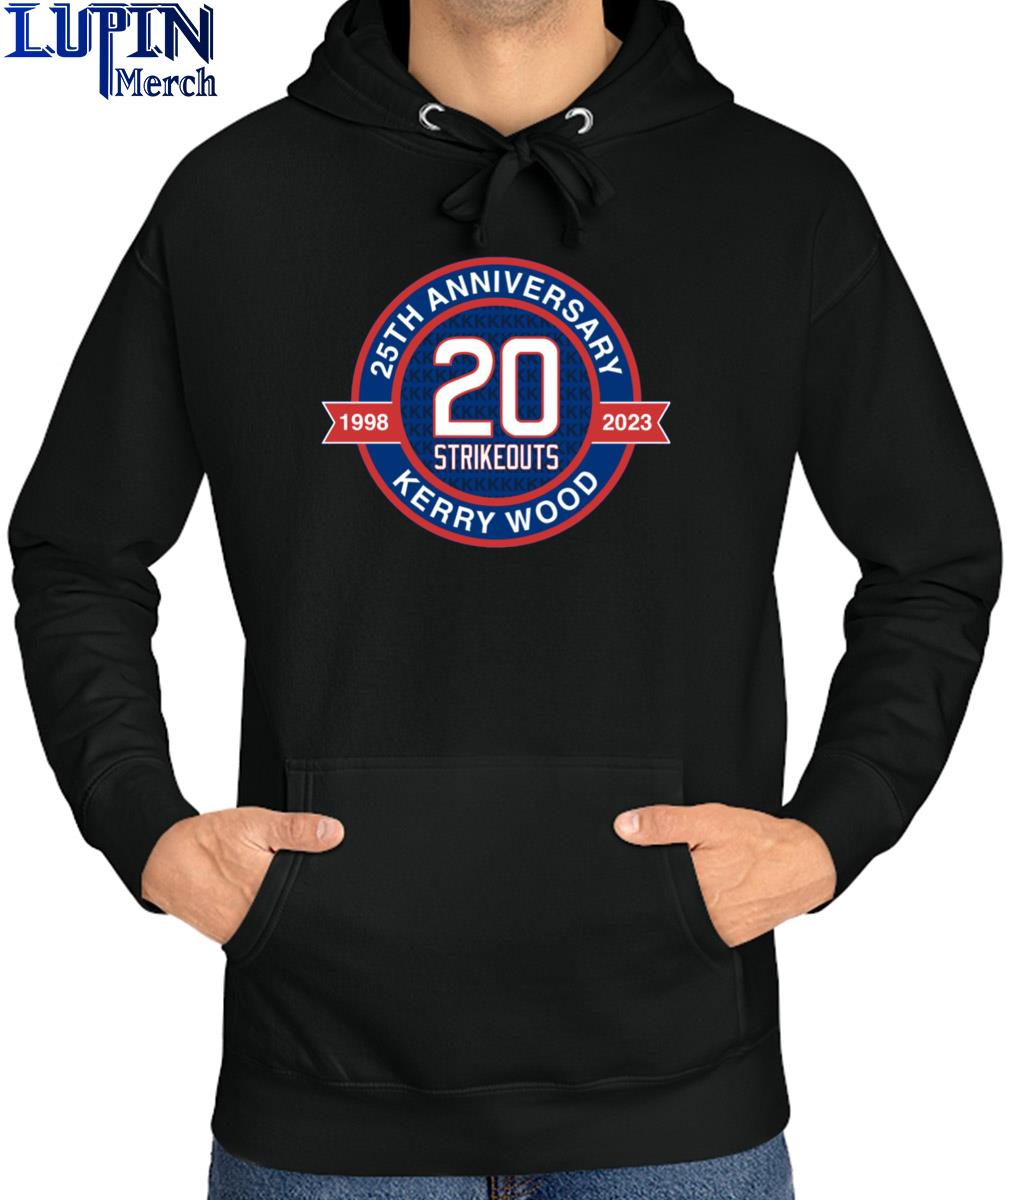 Kerry Wood 25th Anniversary 1998 2023 20 Strikeouts Shirt, hoodie